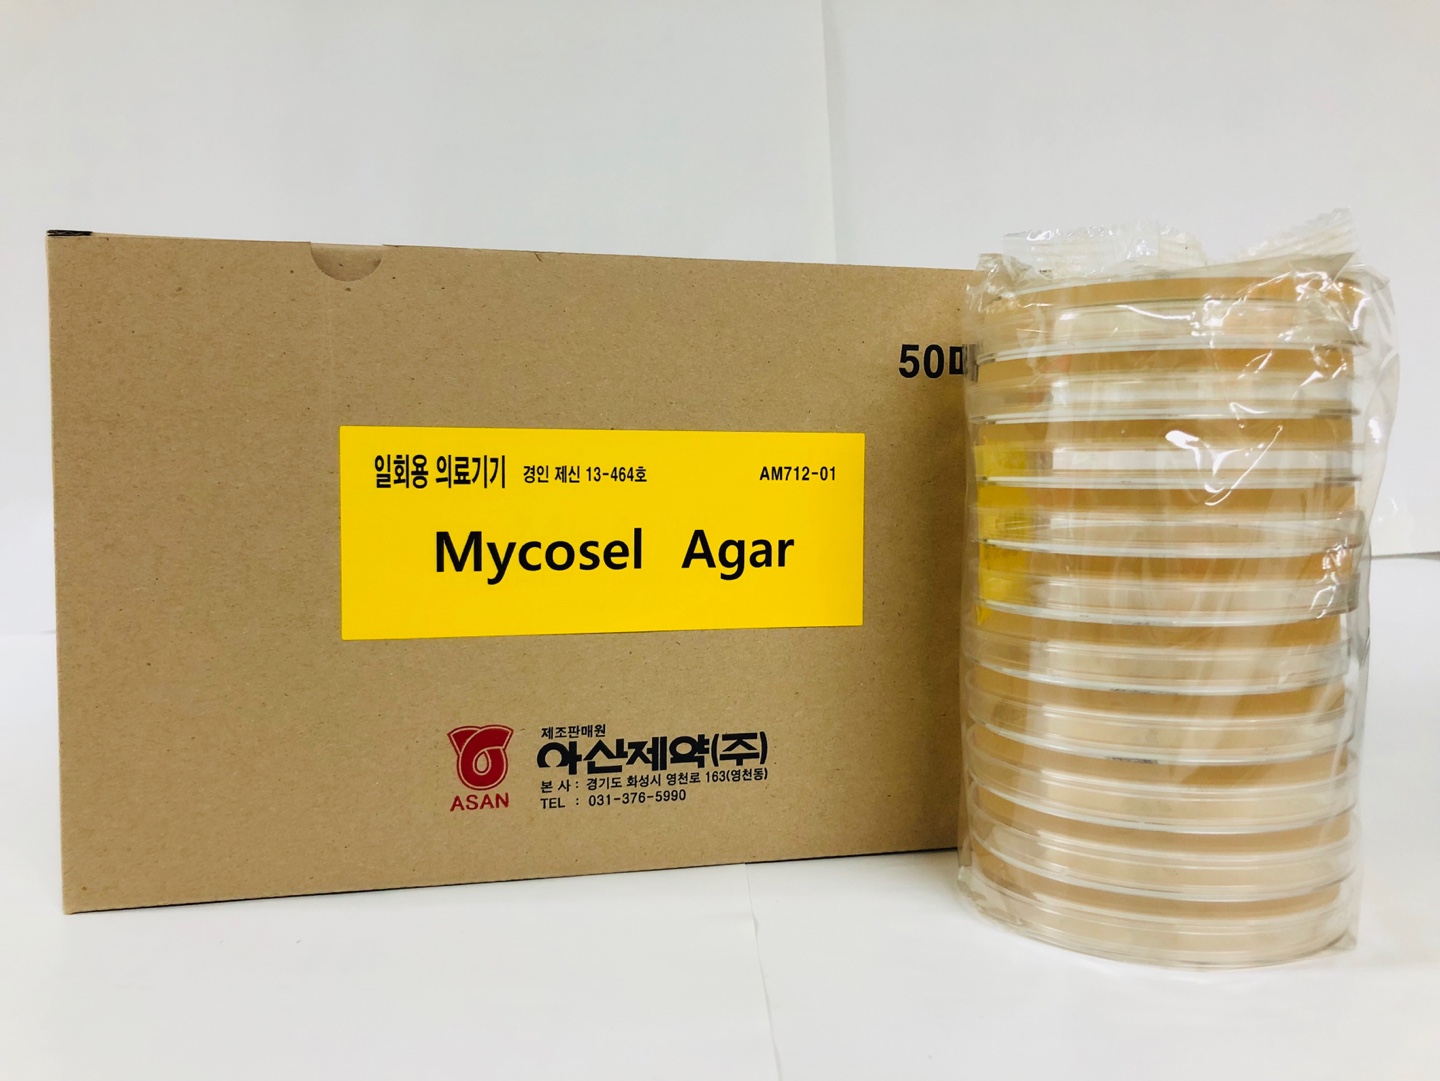 Mycosel Agar